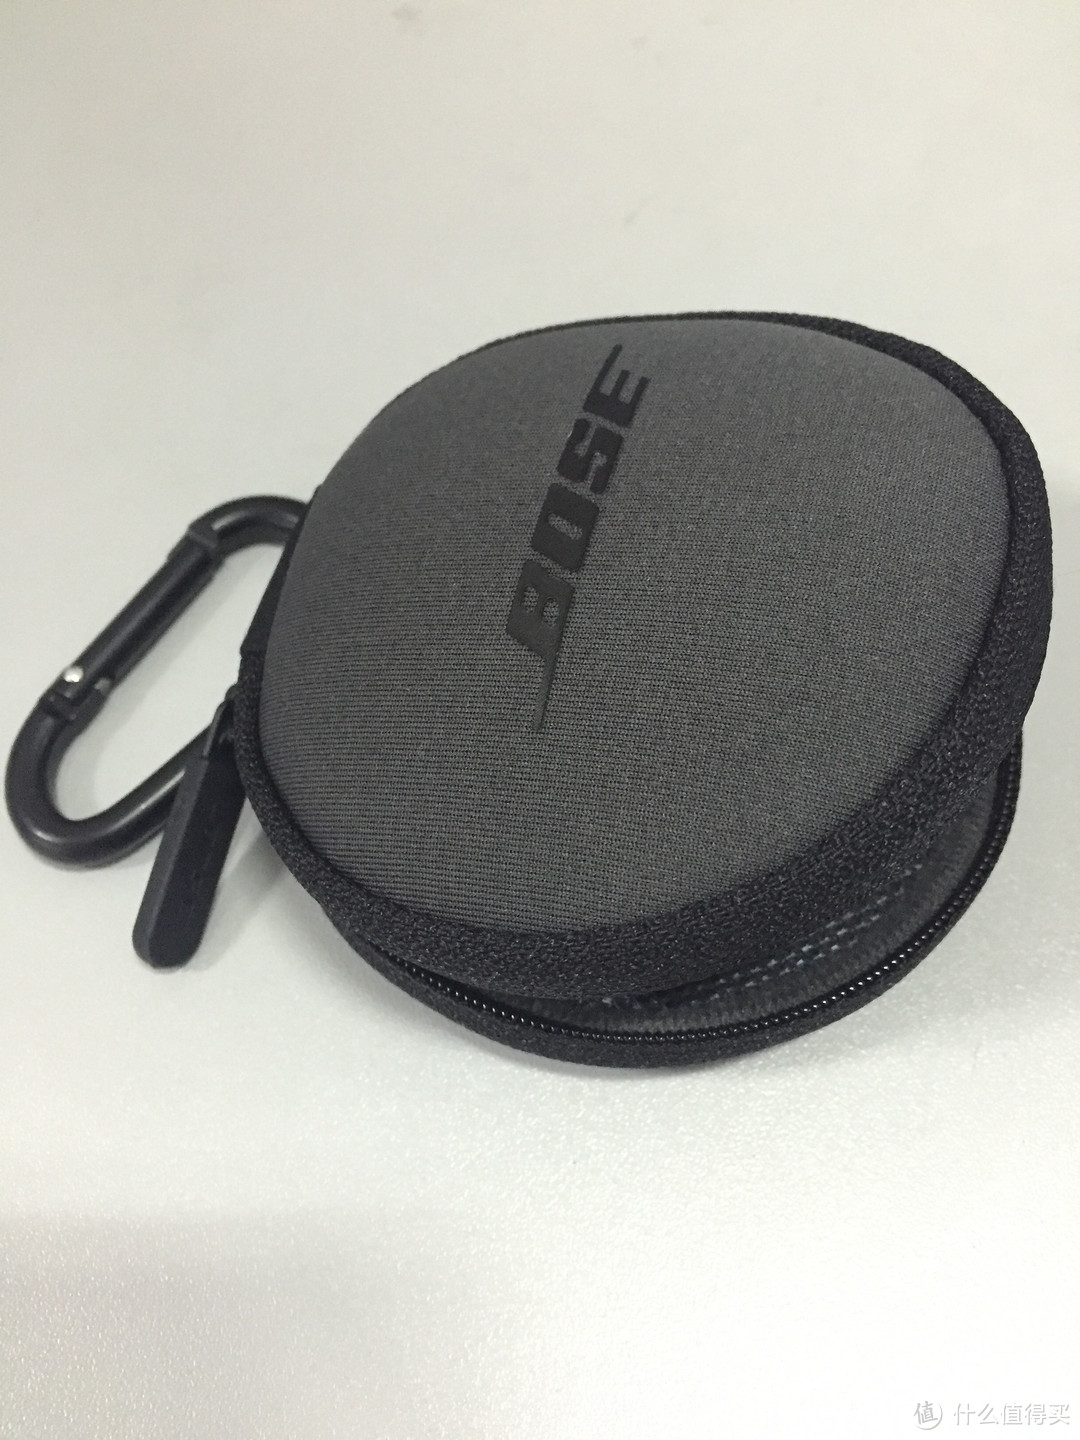 大妈家的首晒： Bose SoundSport For iphone 运动耳塞新配色开箱